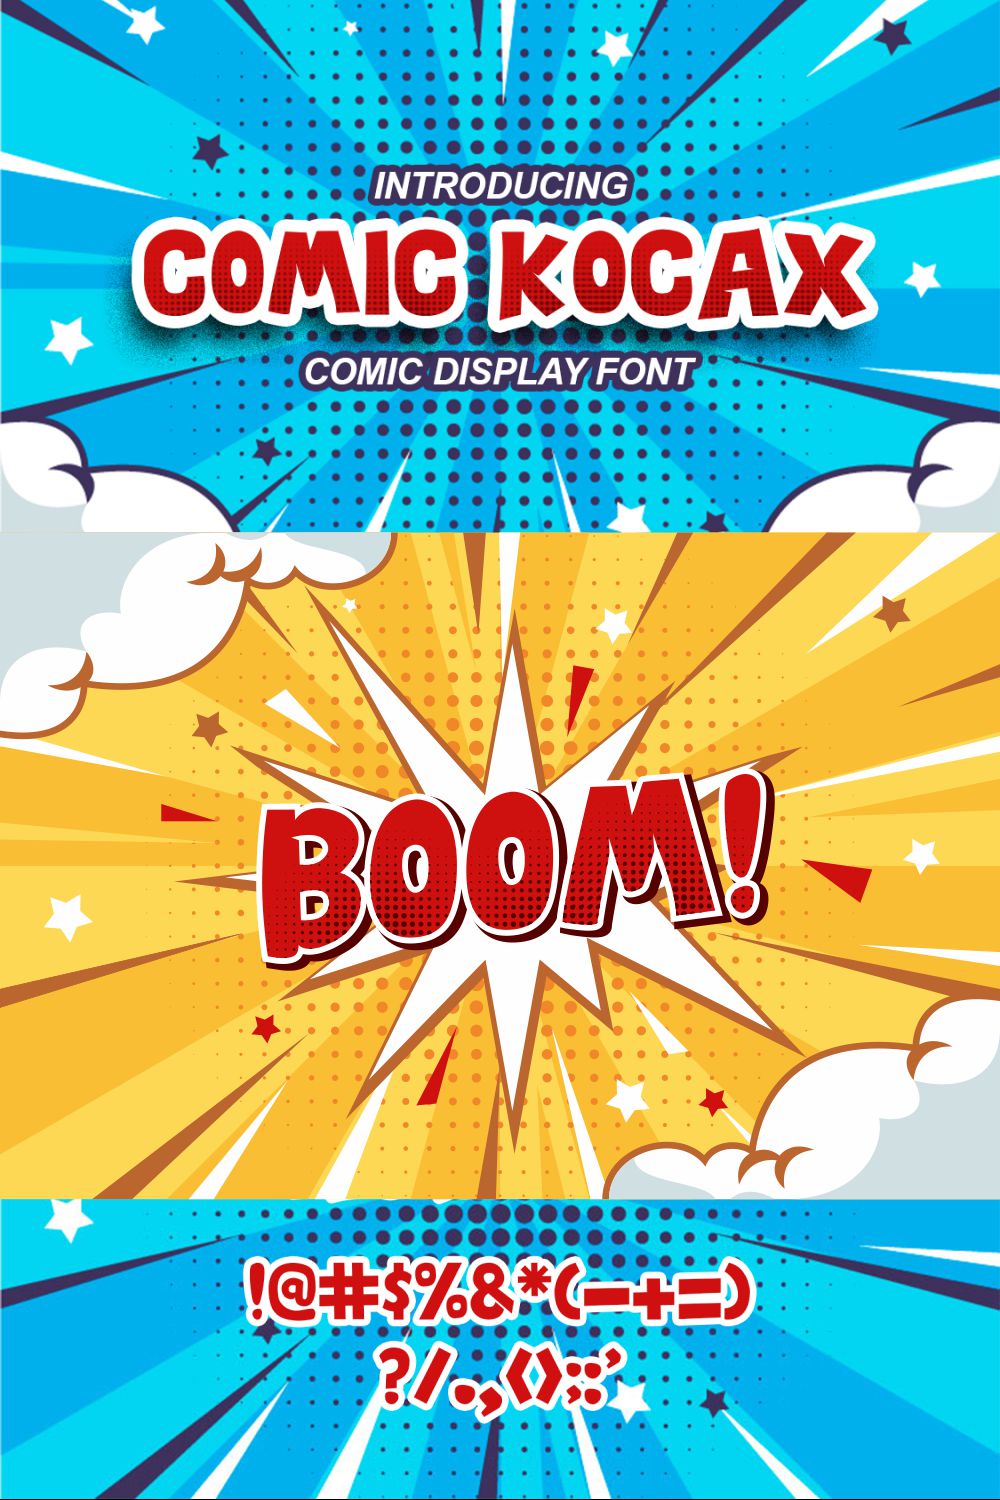 Comic Kocax Display Font pinterest preview image.